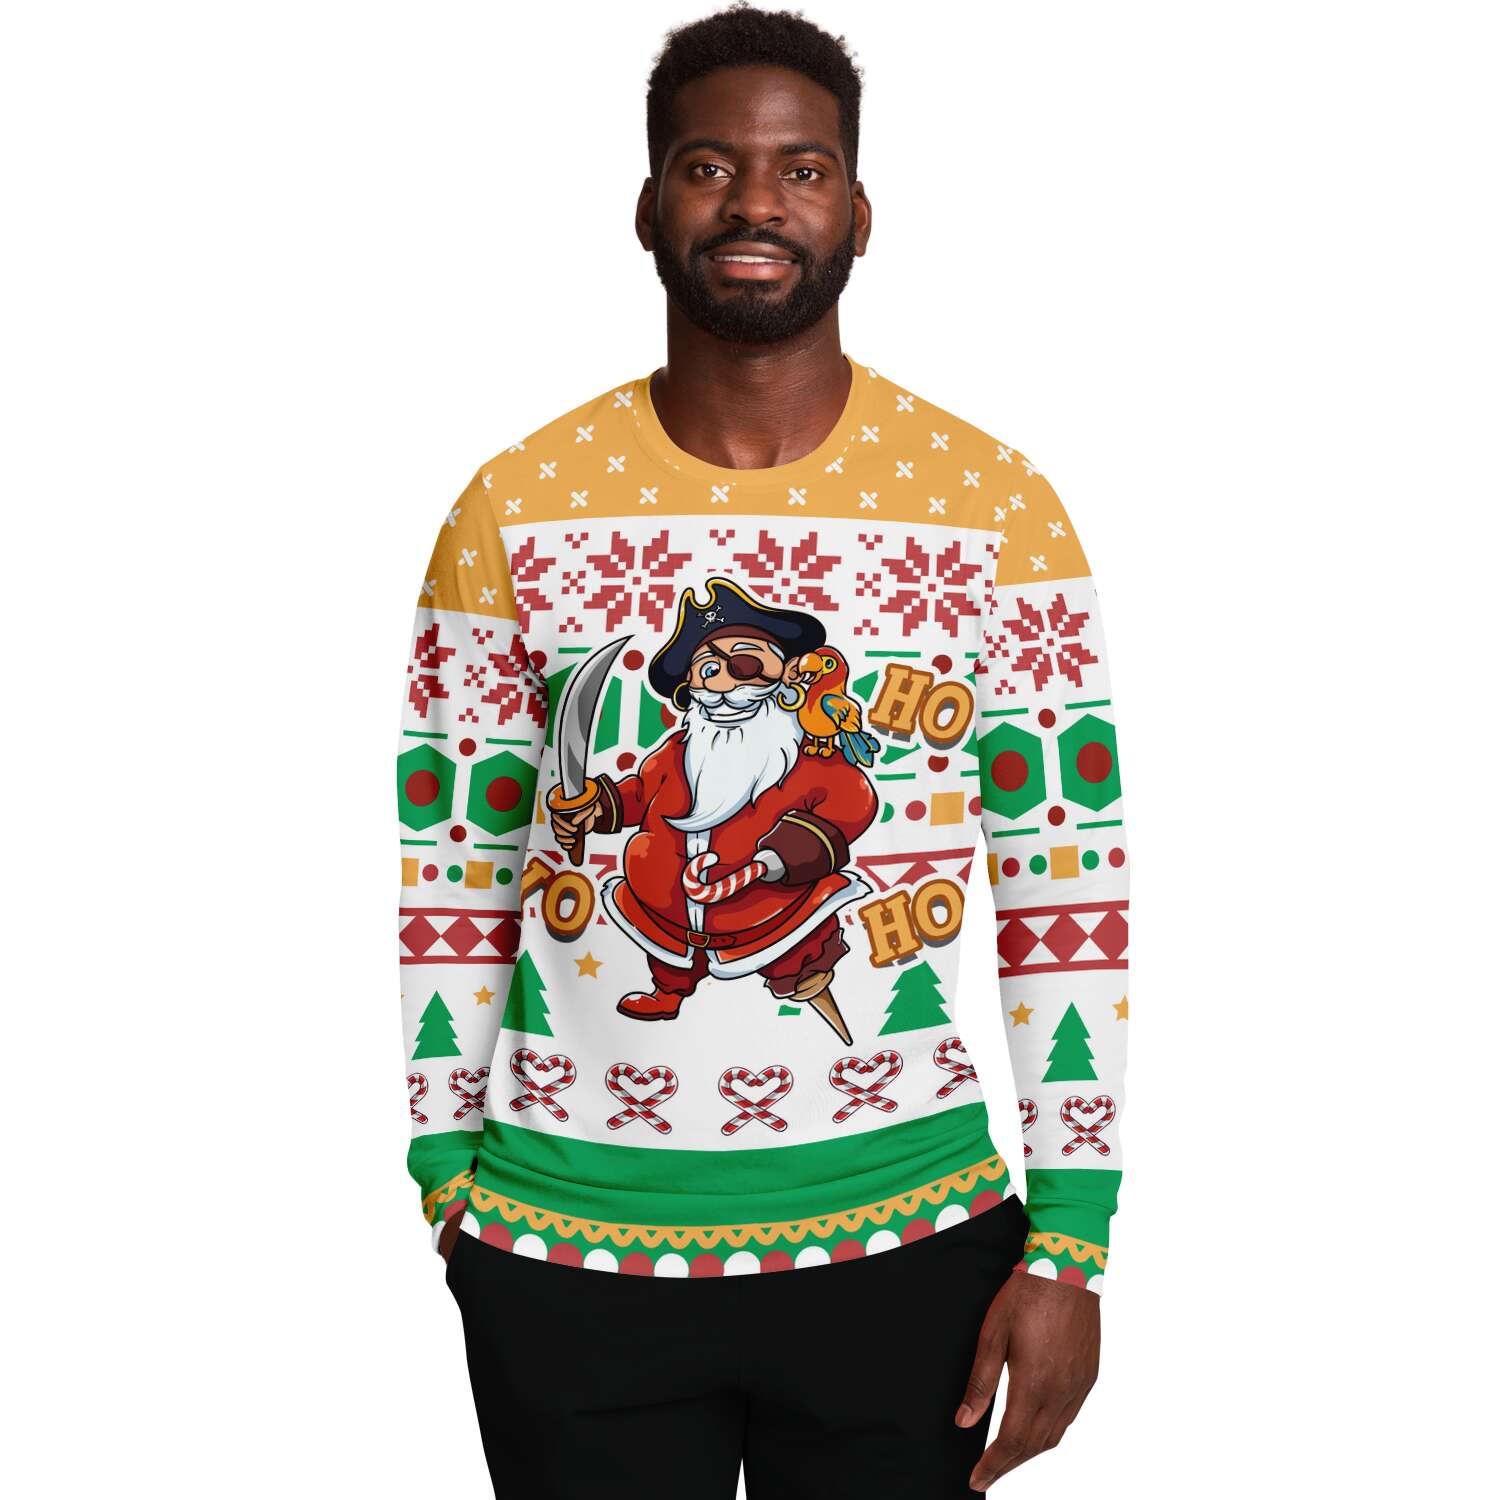 Yo Ho Ho Pirate Sweatshirt | Unisex Ugly Christmas Sweater, Xmas Sweater, Holiday Sweater, Festive Sweater, Funny Sweater, Funny Party Shirt